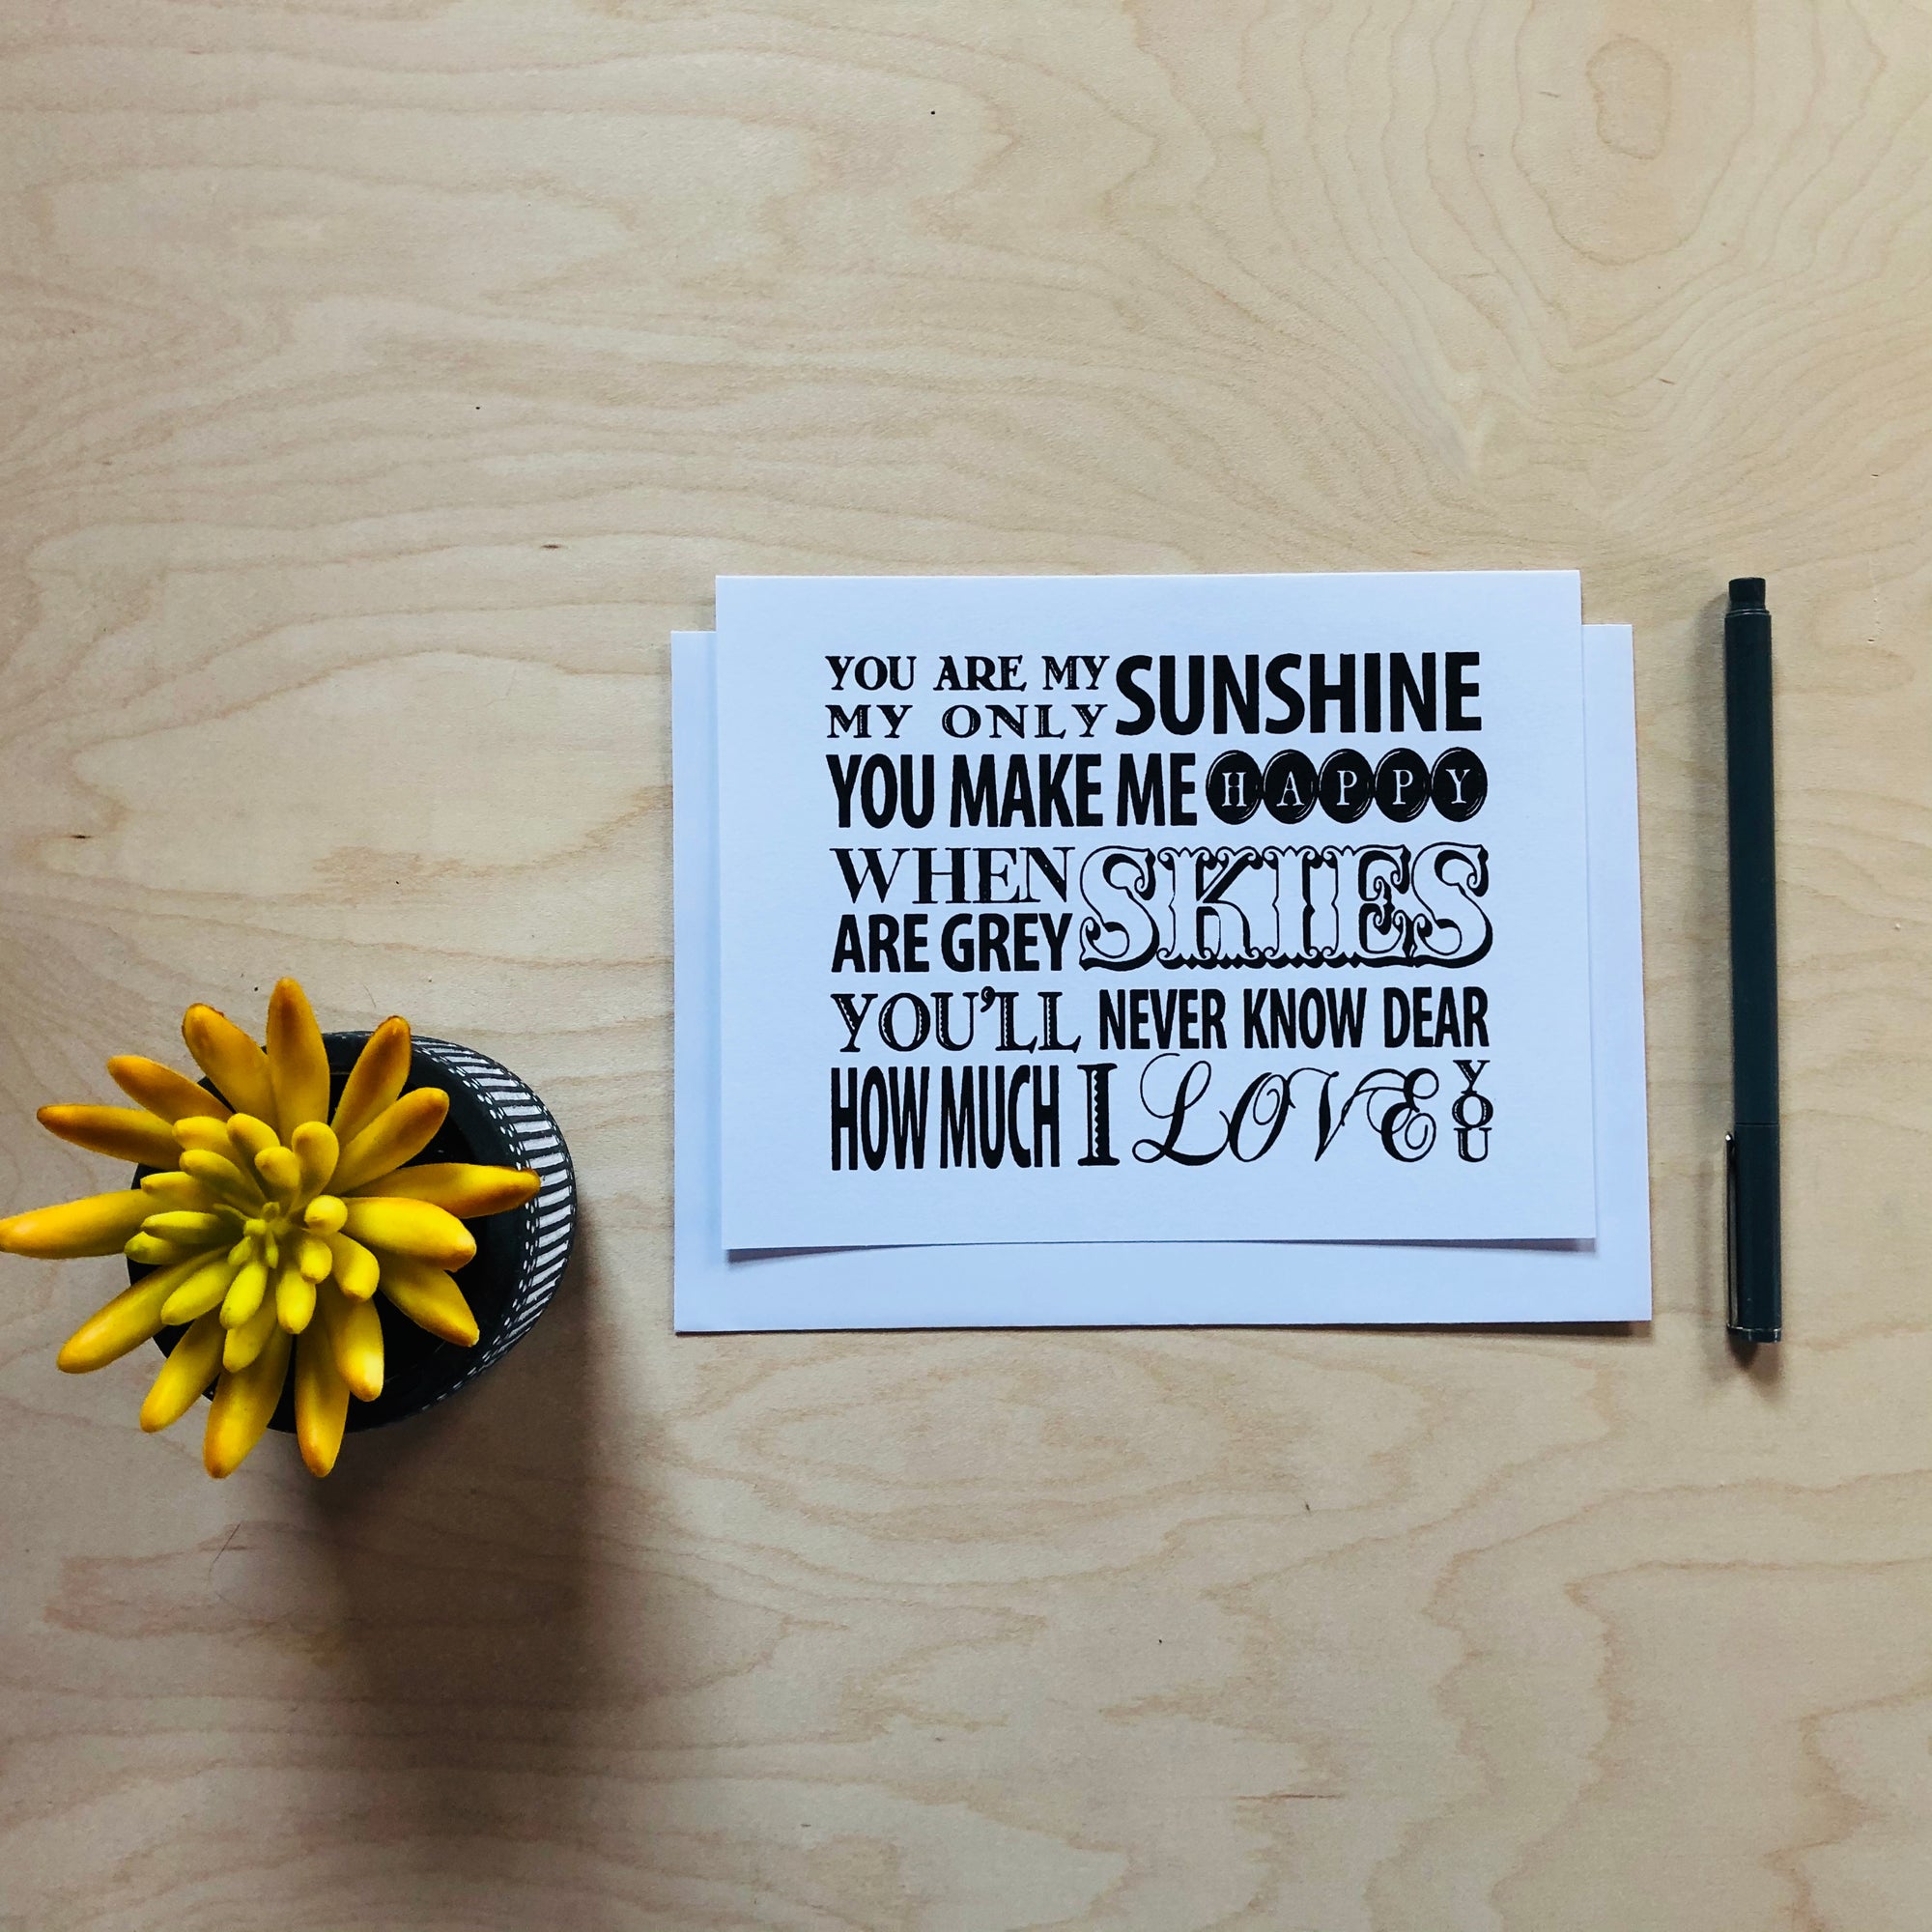 You Are My Sunshine lyrics card